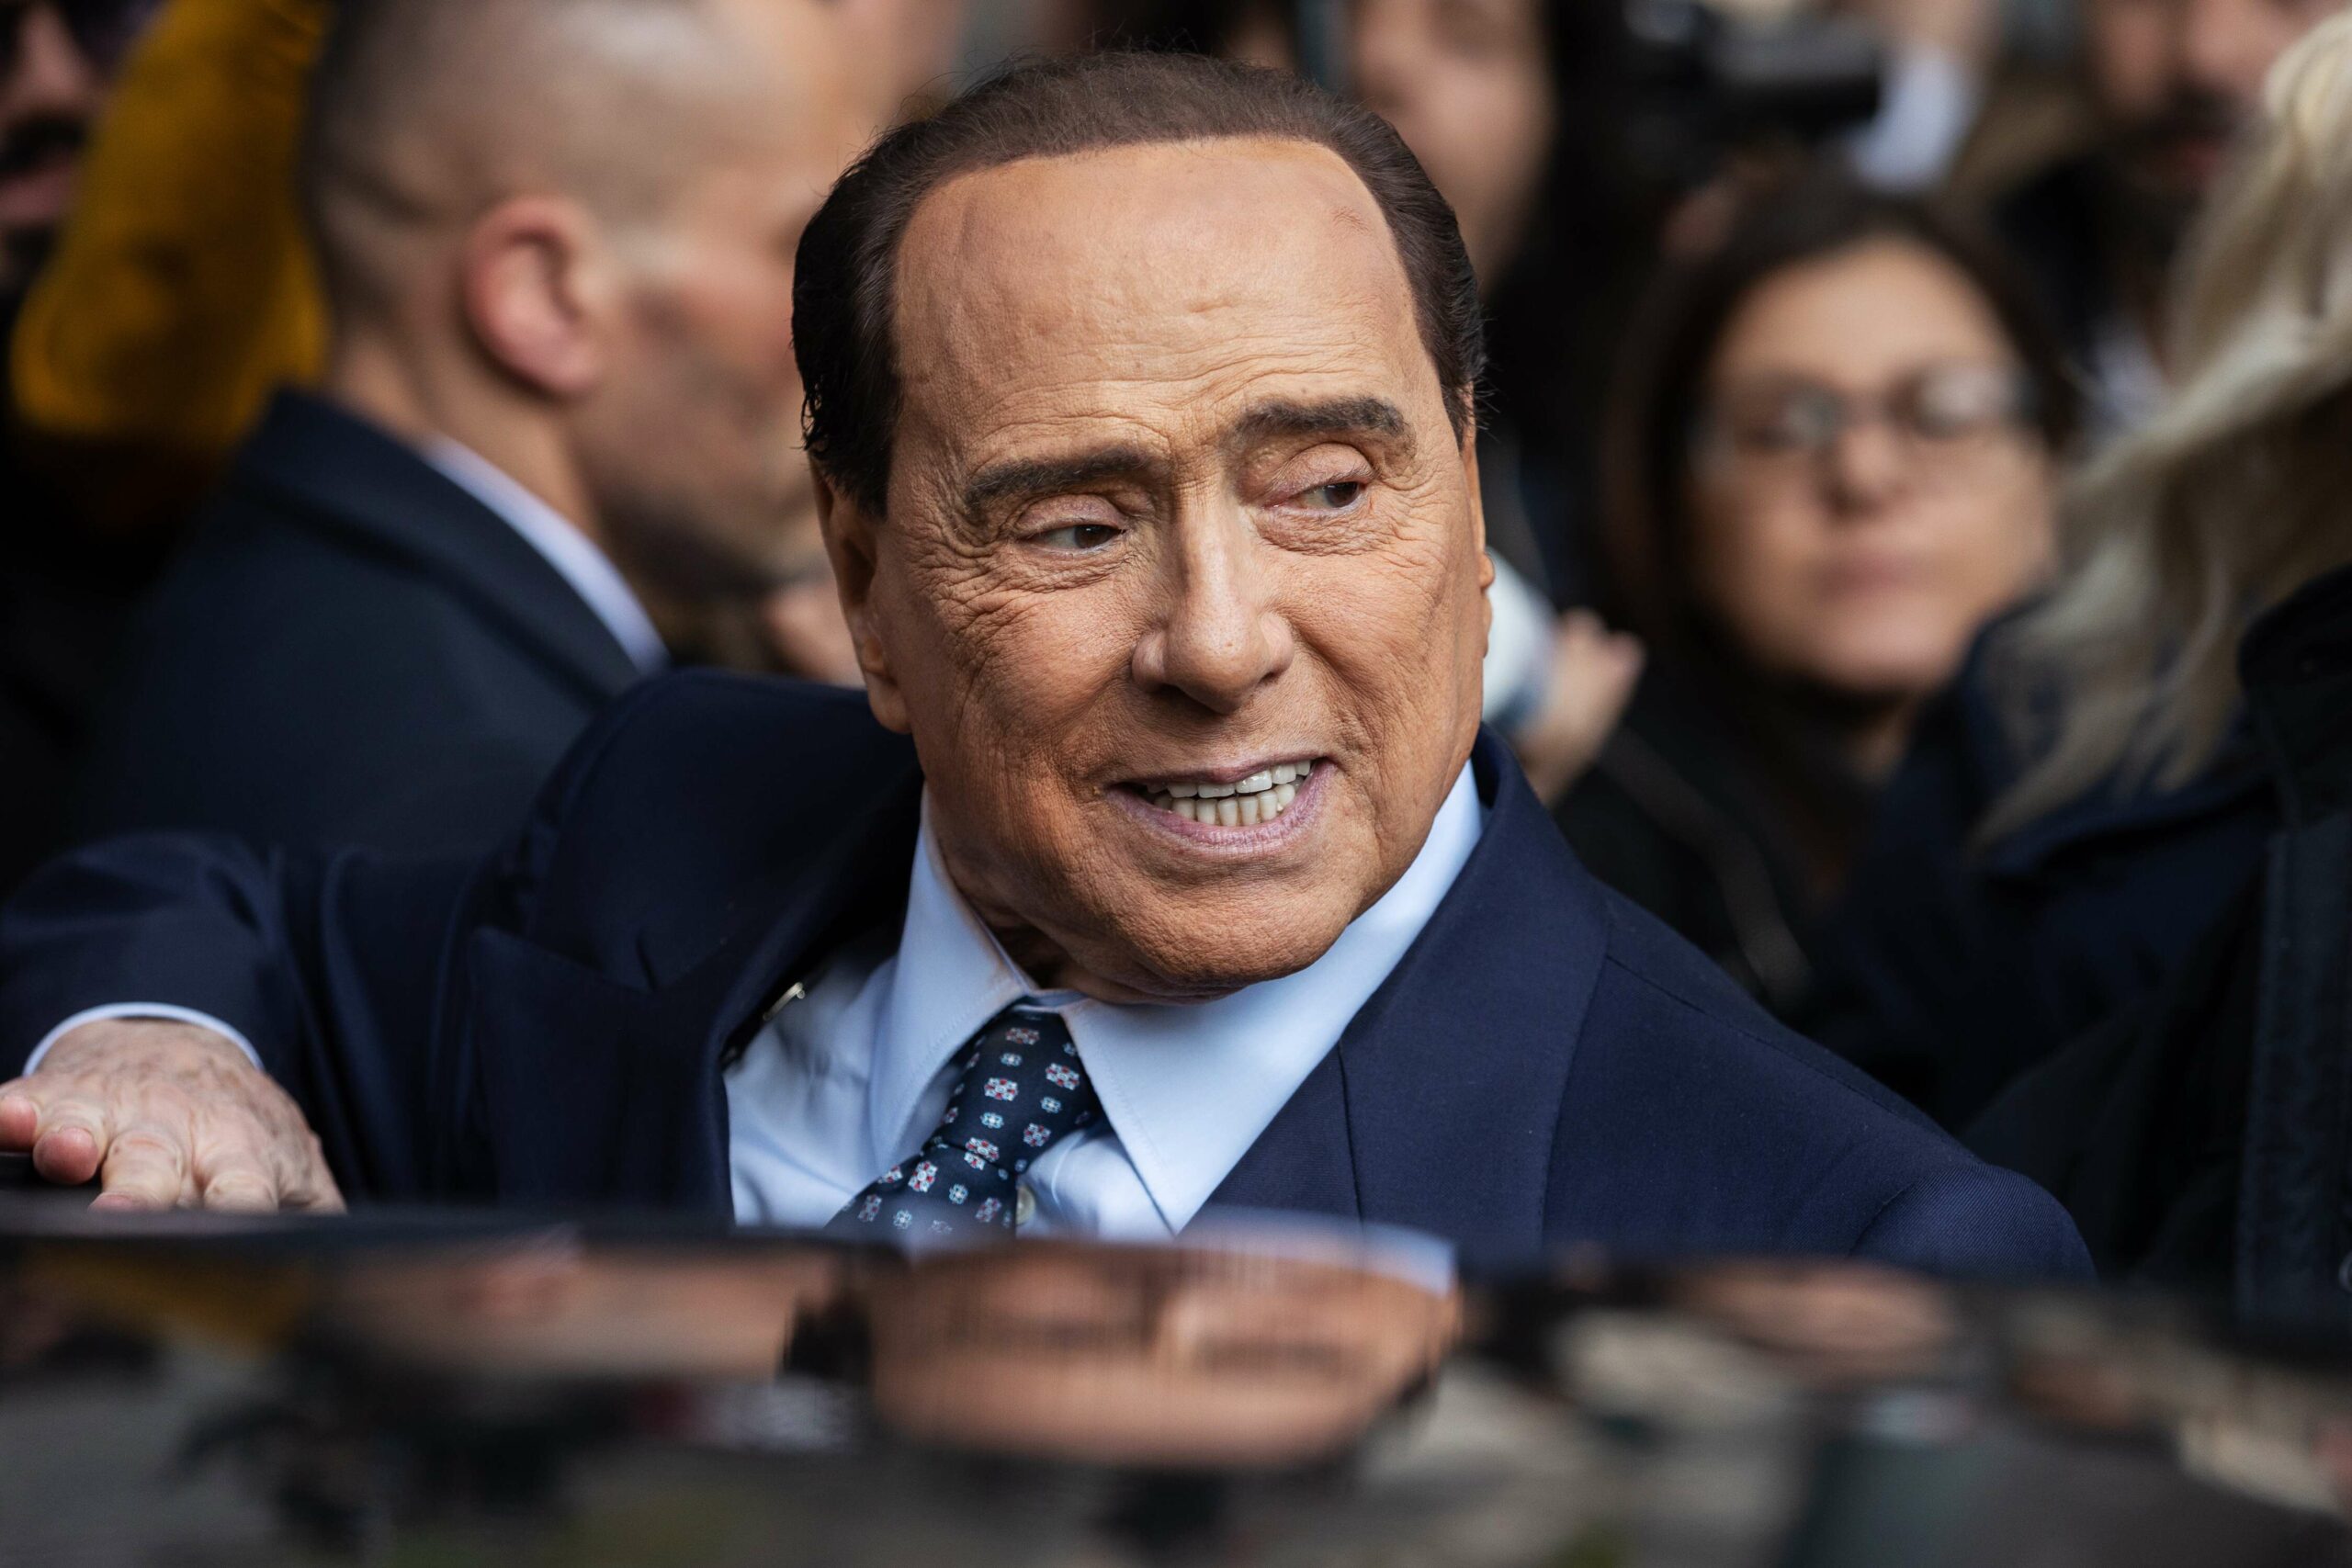 Silvio Berlusconi Biography